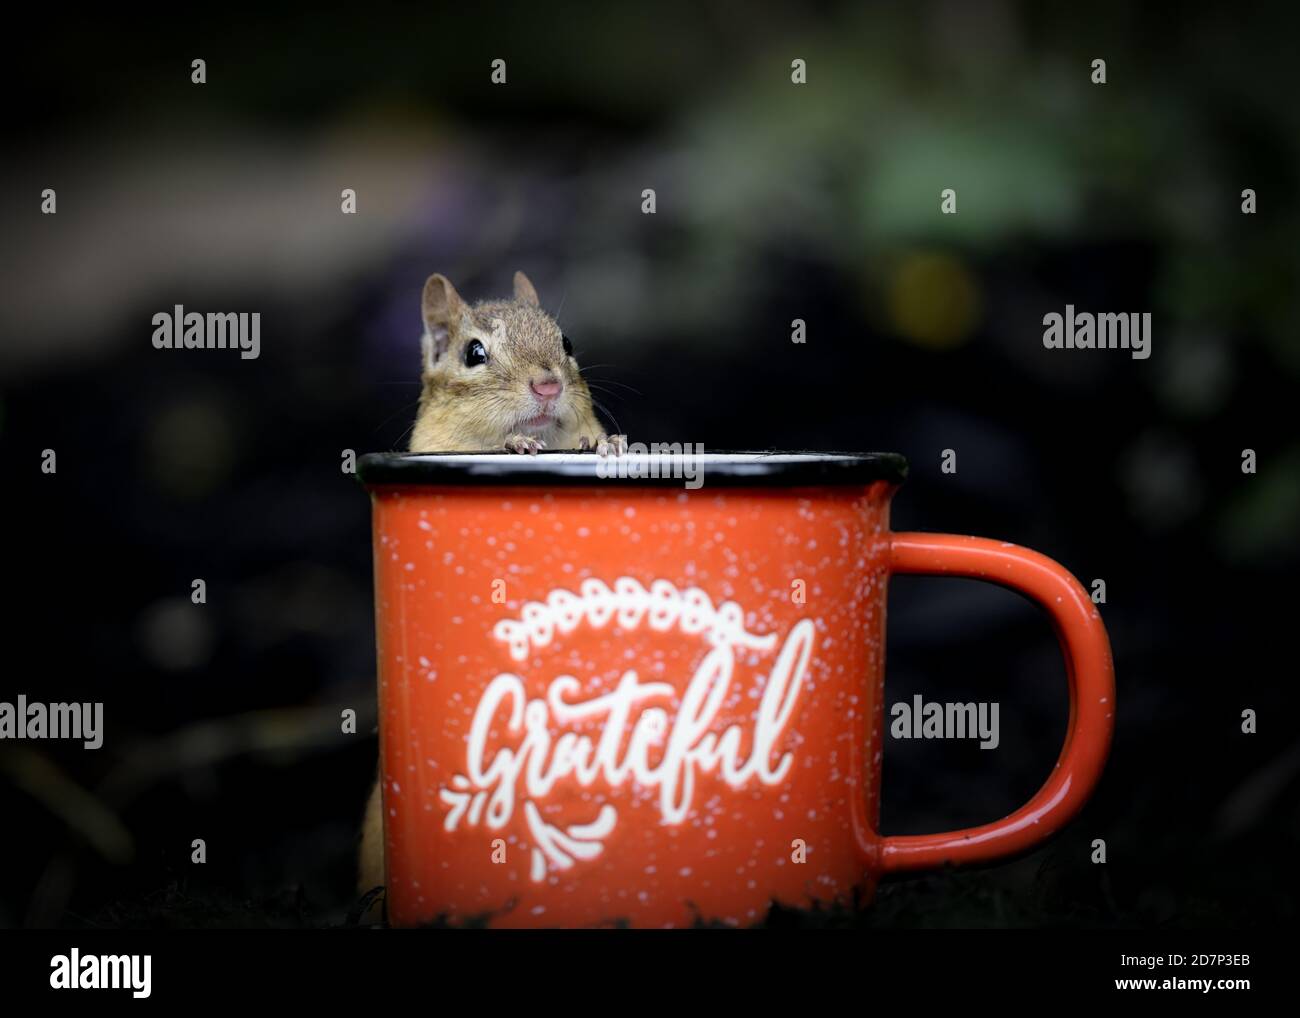 An Eastern chipmunk in a mug eating peanuts Stock Photo